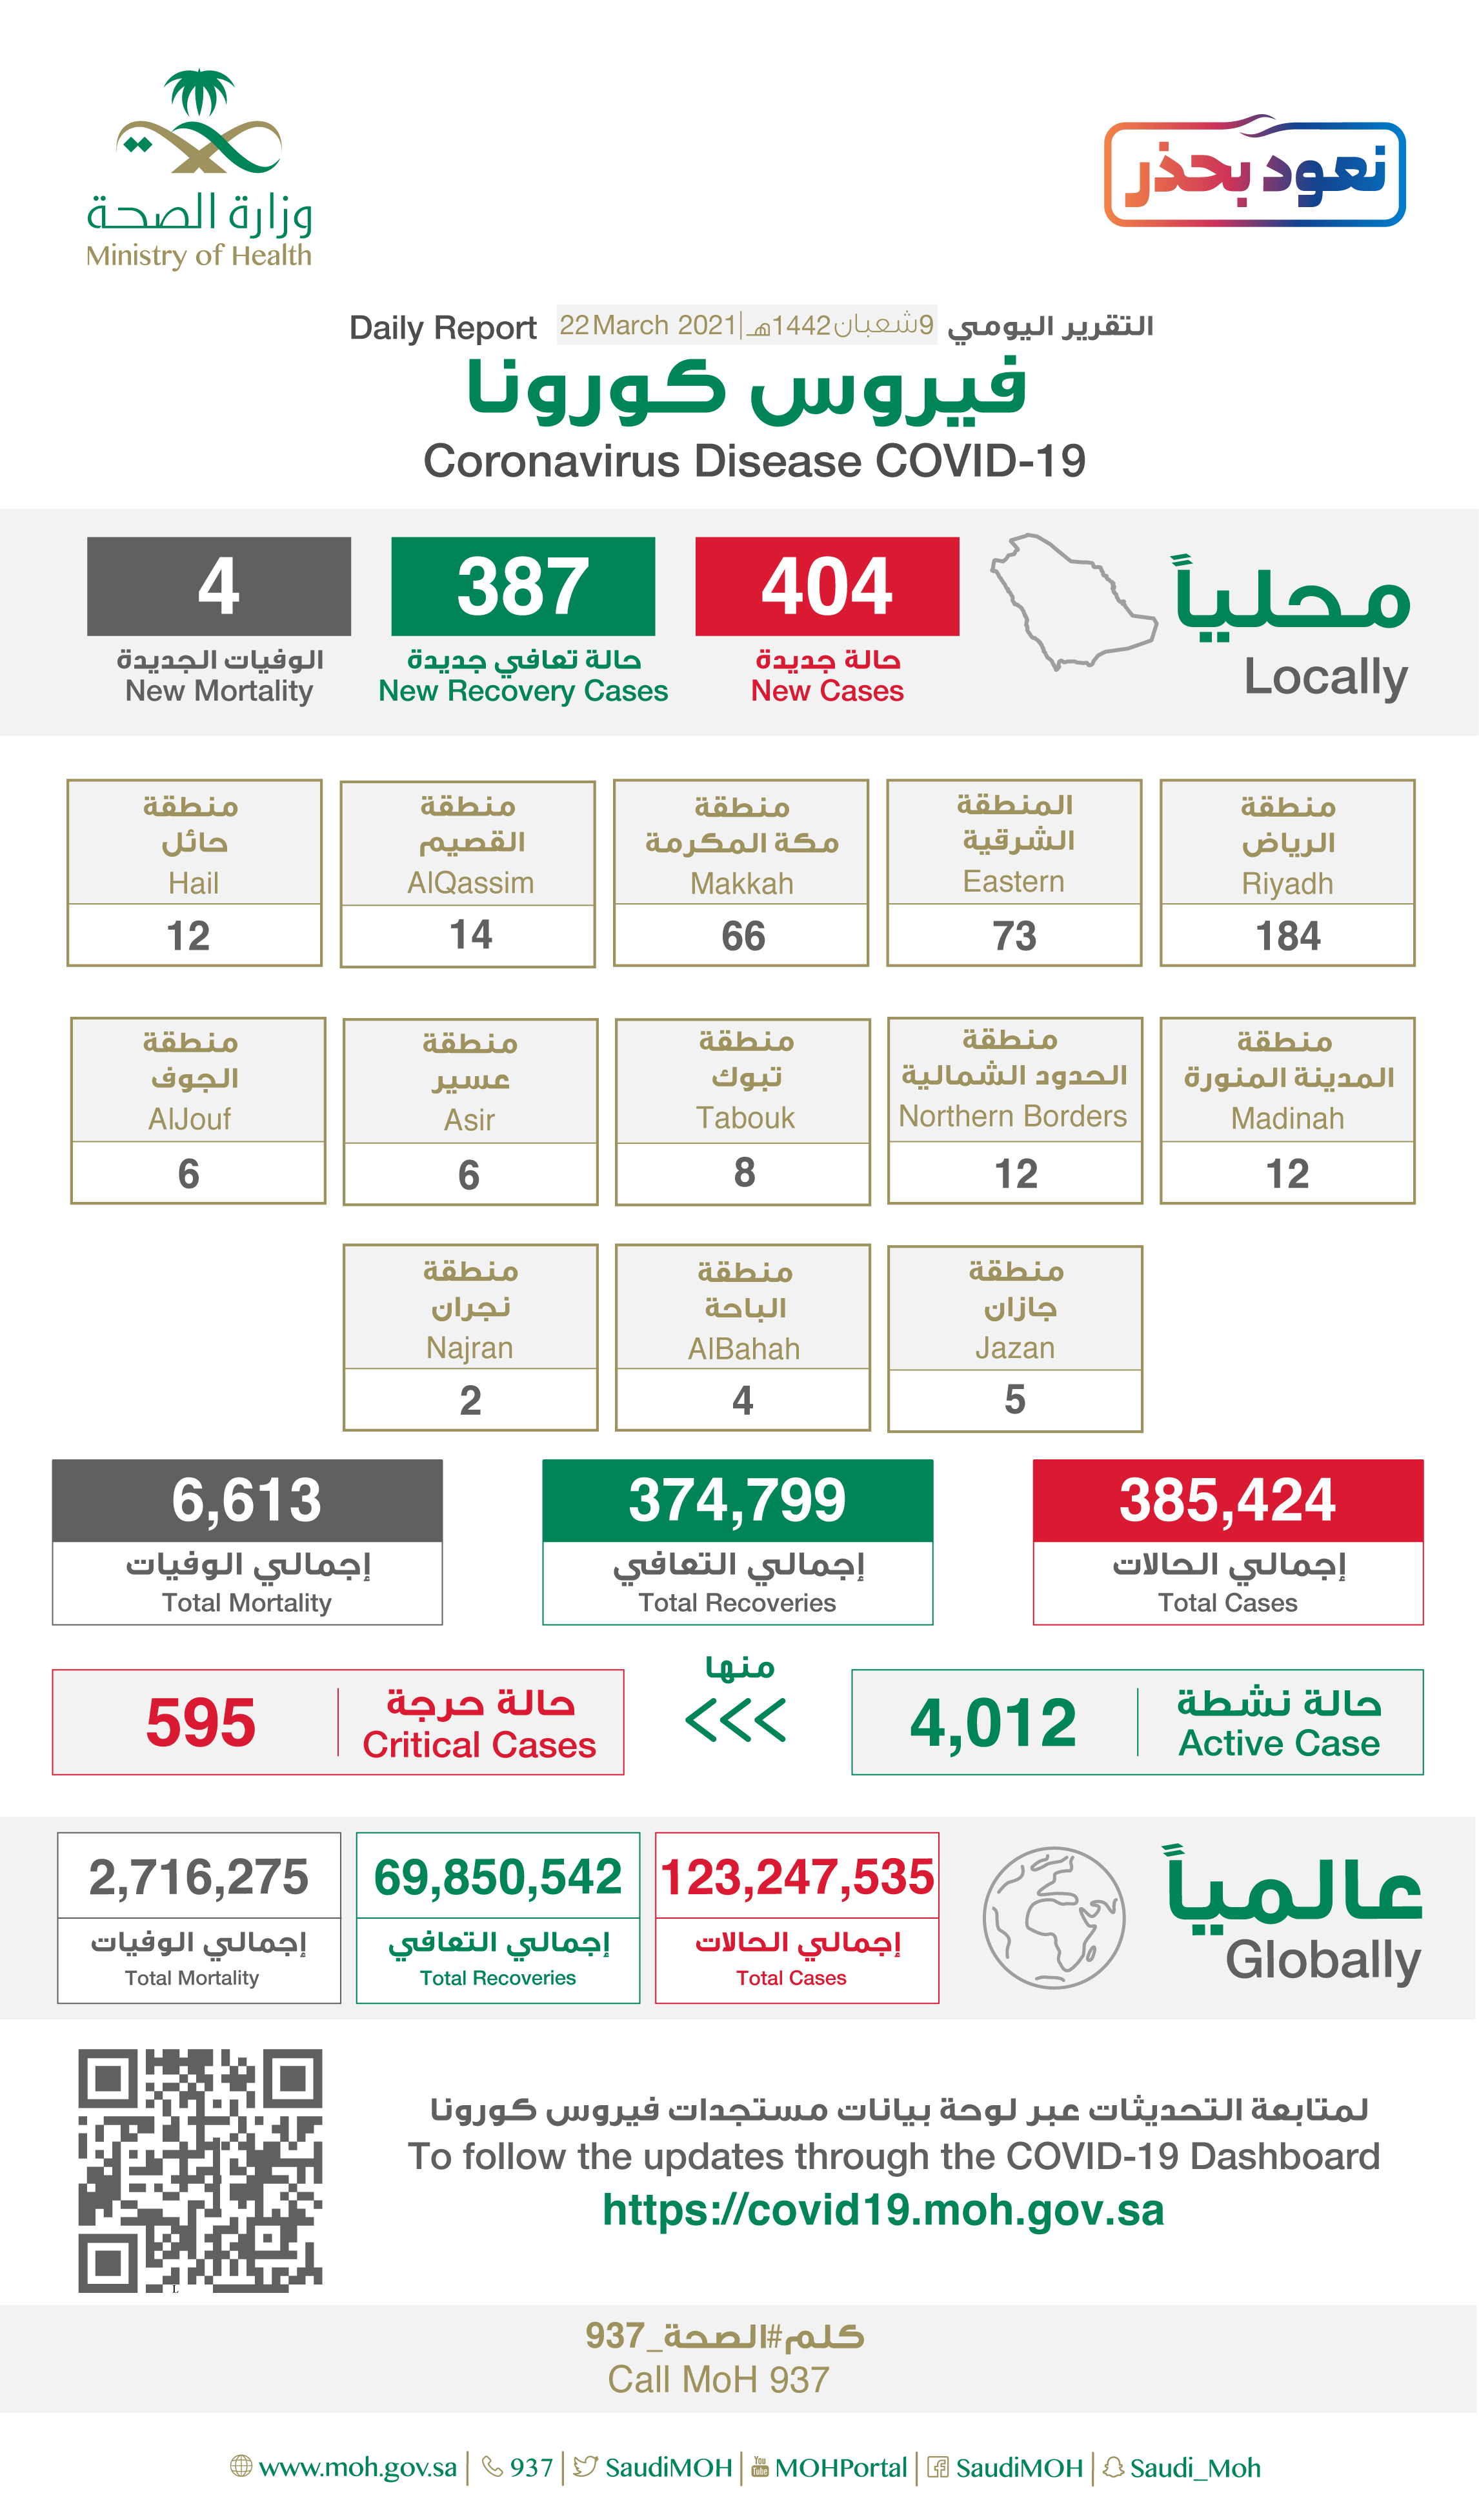 Saudi Arabia Coronavirus : Total Cases :385,424 , New Cases : 404, Cured : 374,799 , Deaths: 6,613, Active Cases : 4,012